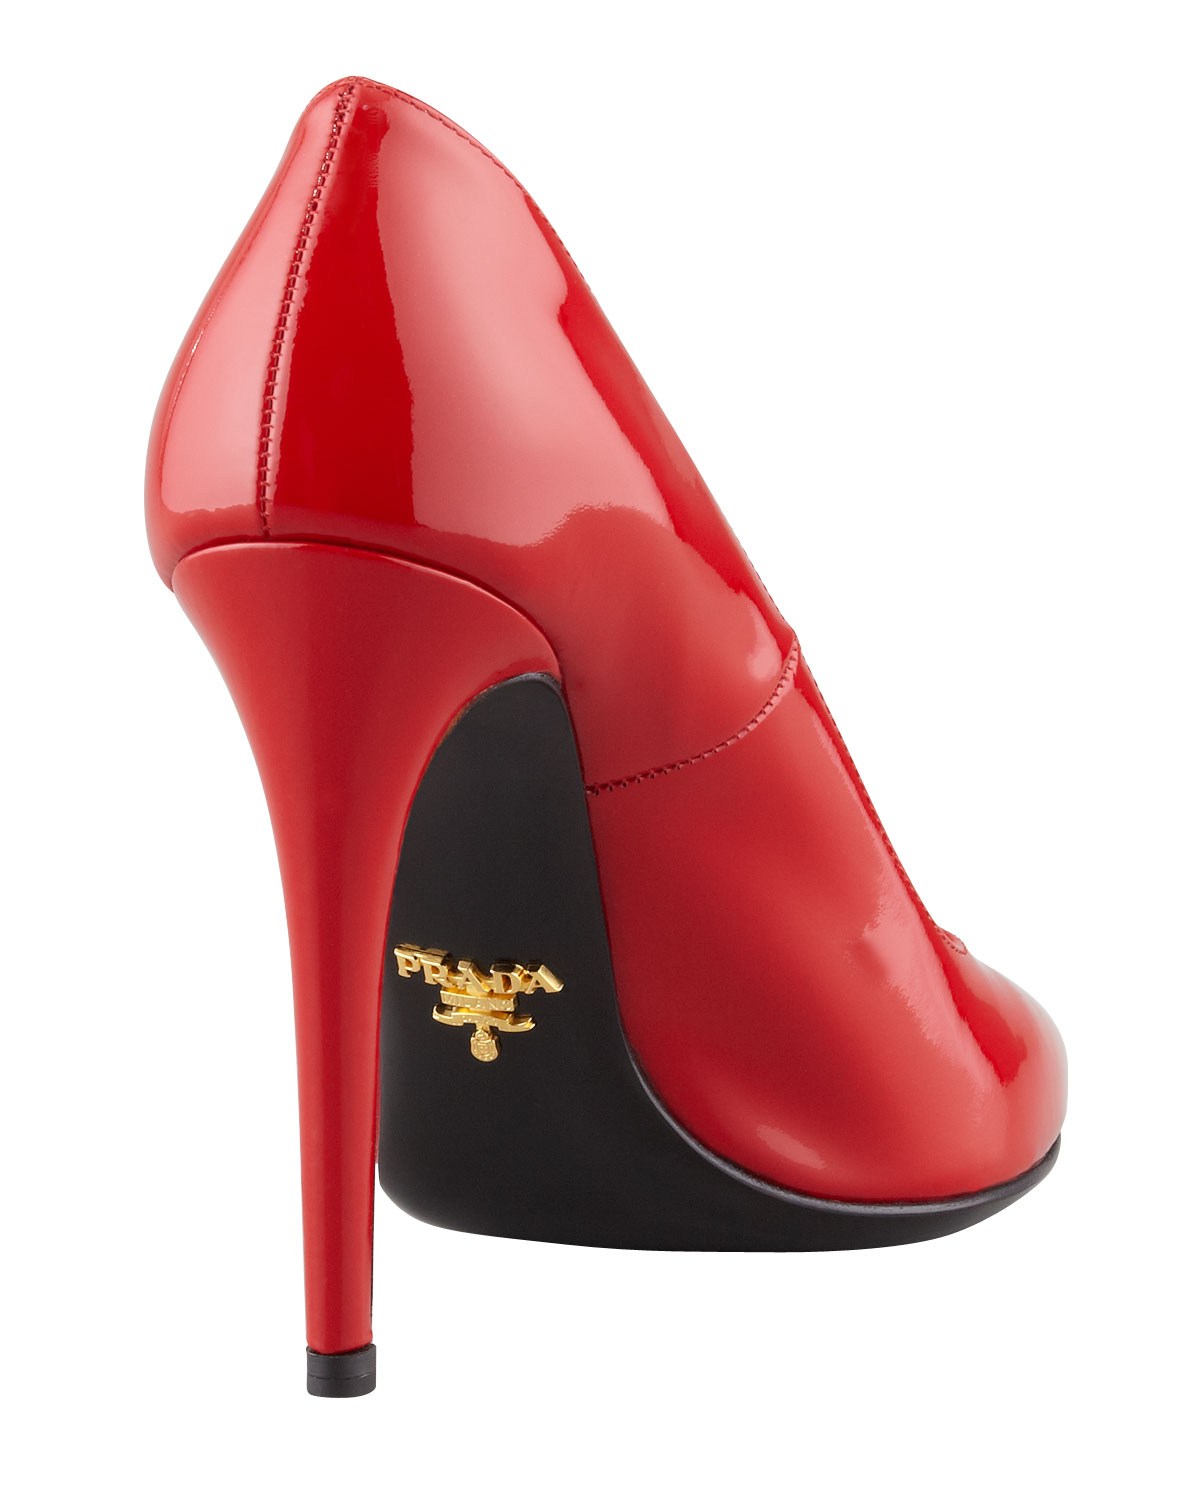 prada red high heels, OFF 76%,www 